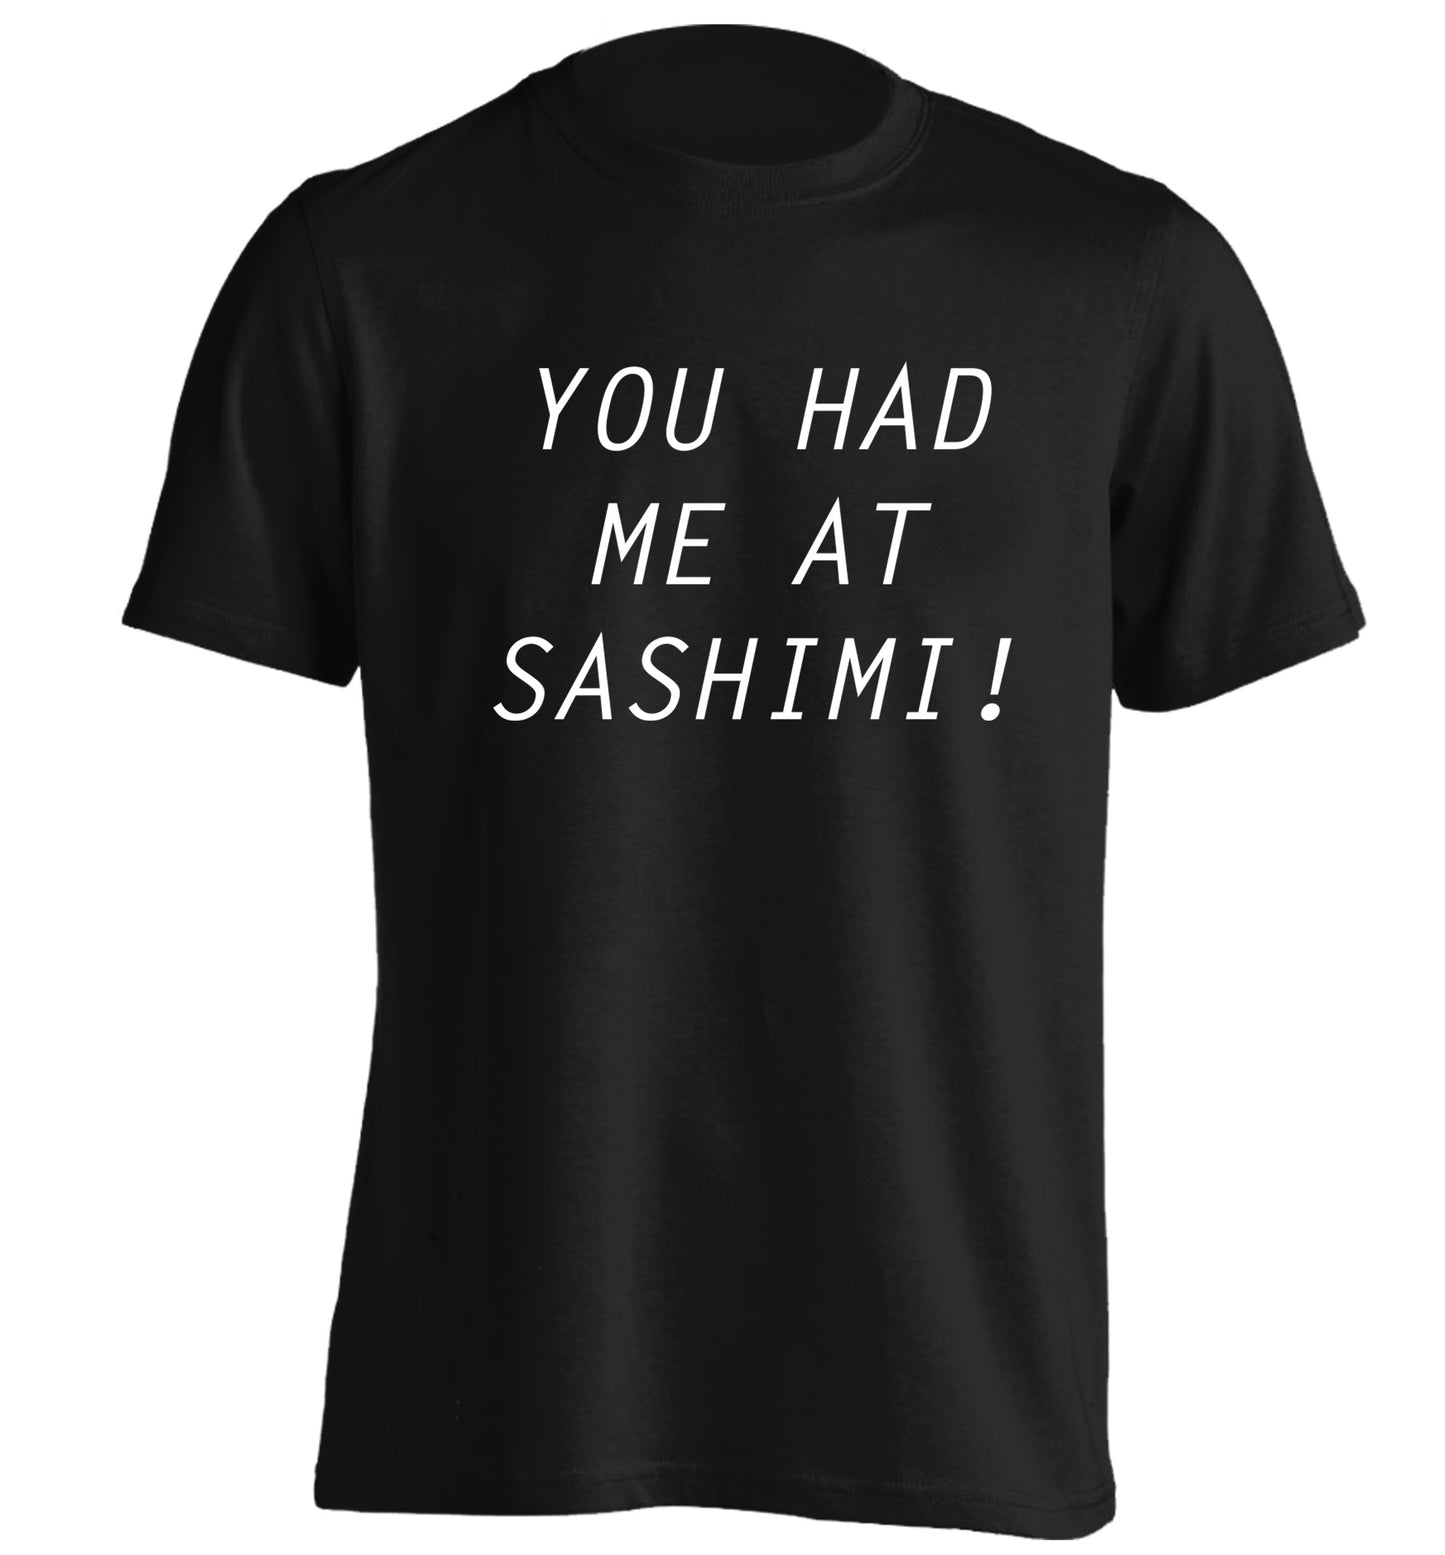 You had me at sashimi adults unisex black Tshirt 2XL